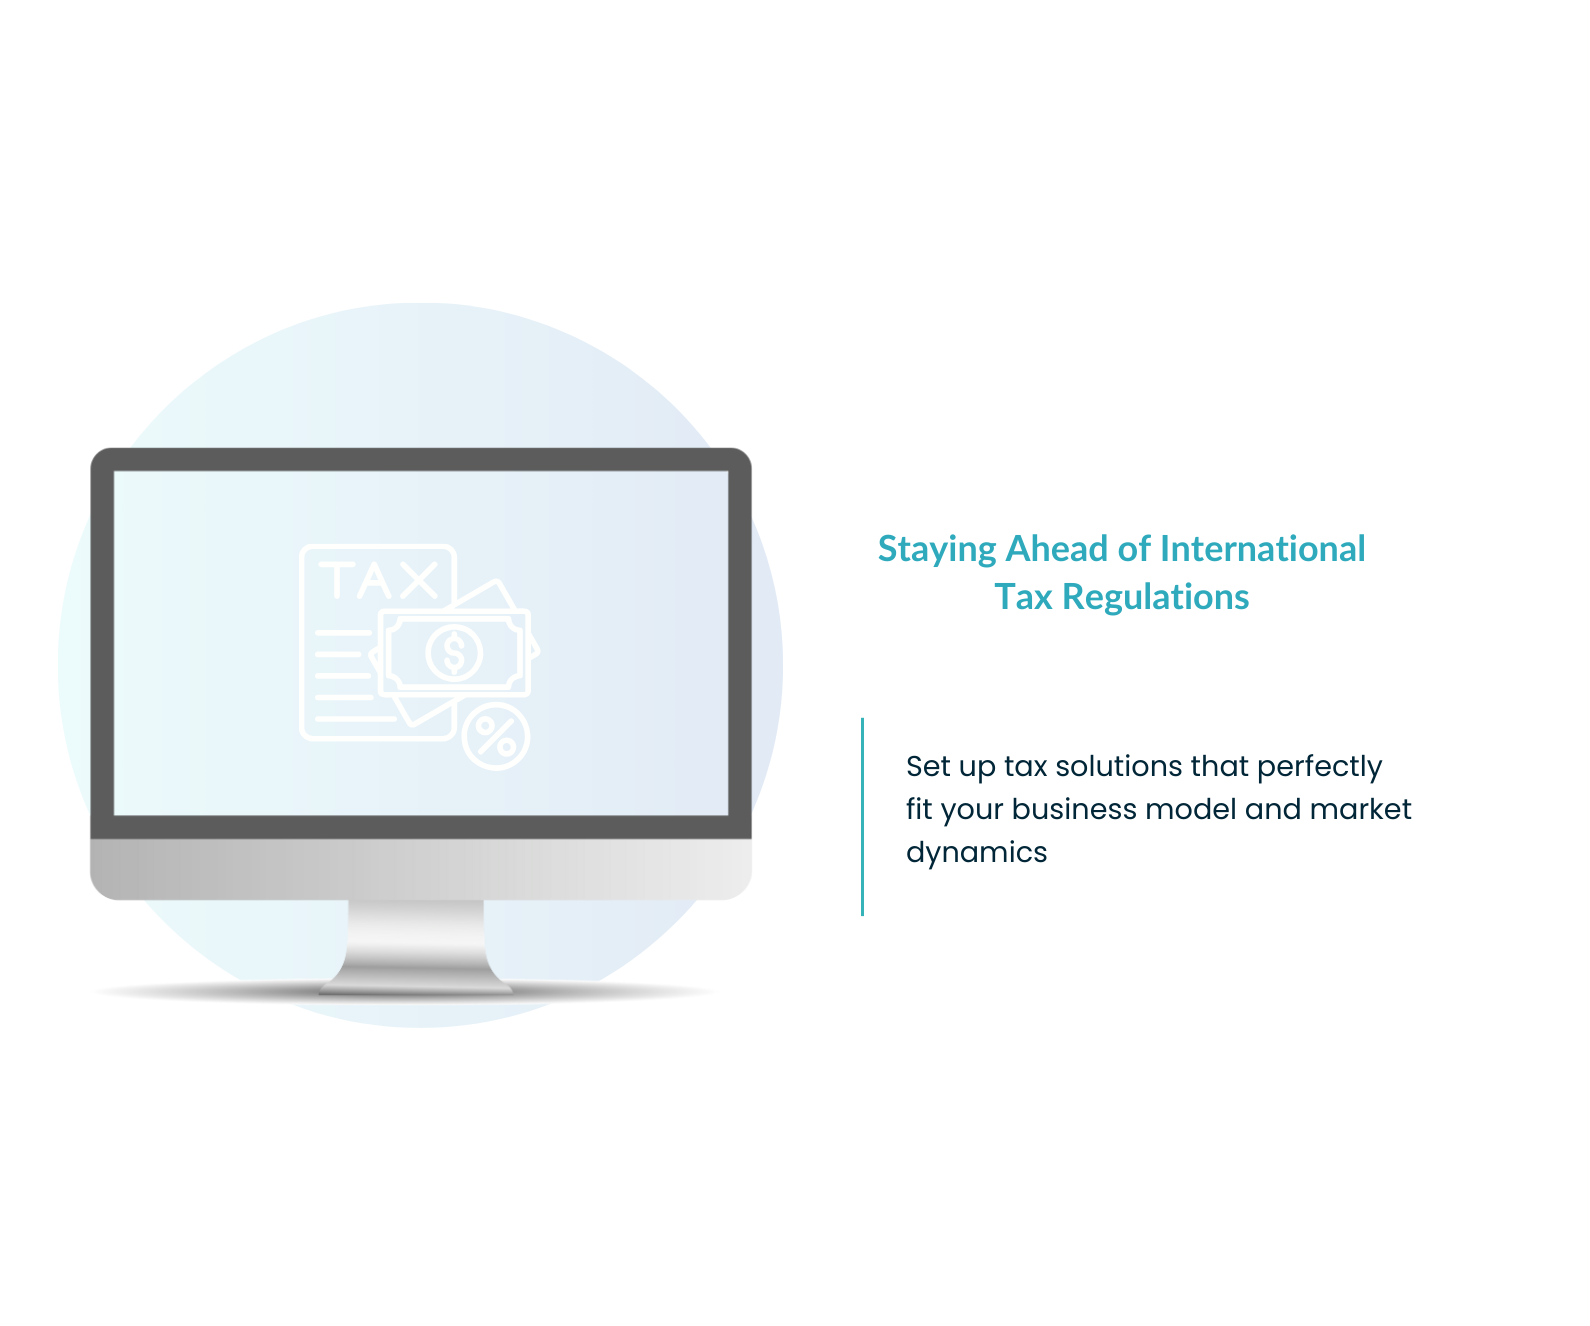 Staying Ahead of International Tax Regulations